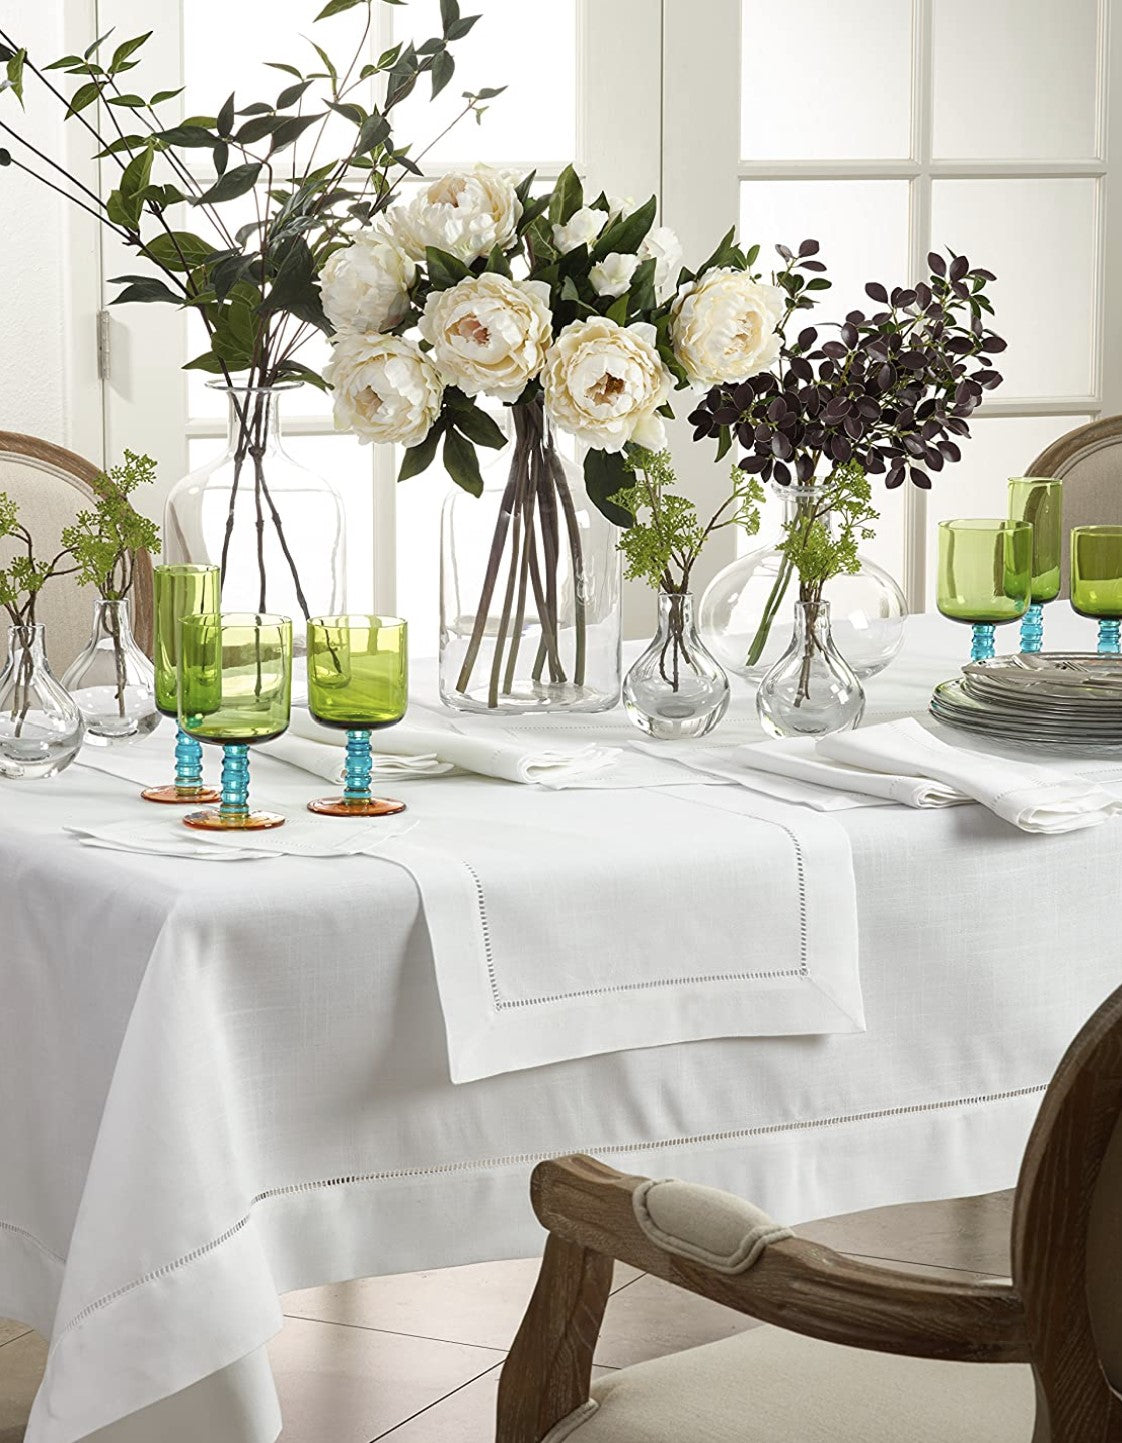 Classic Hemstitch Tablecloths --- 100% Linen, White Color --- Various Sizes